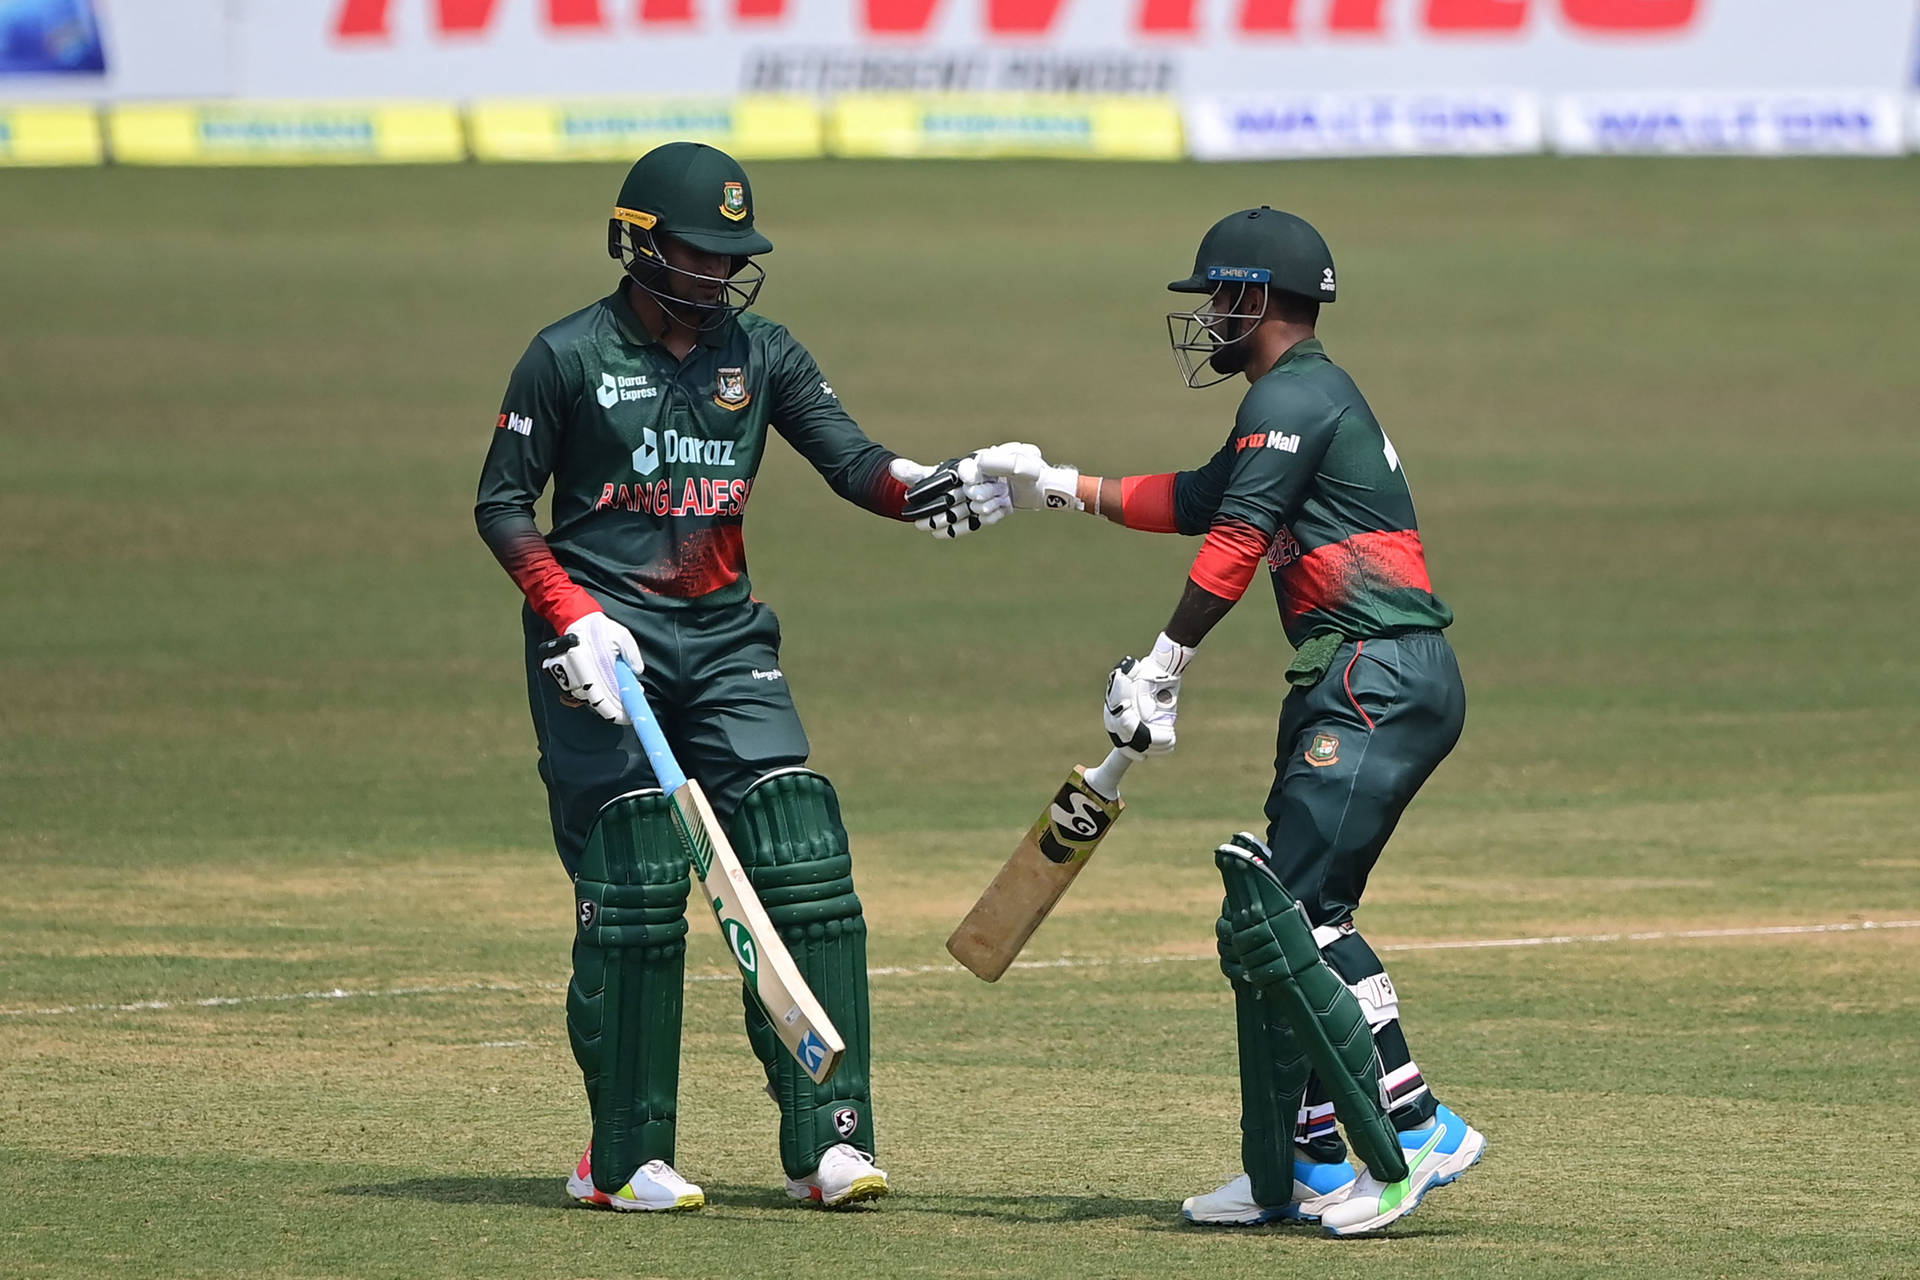 Passionate Unity - Bangladesh Cricket Team Celebrating A Victory Background